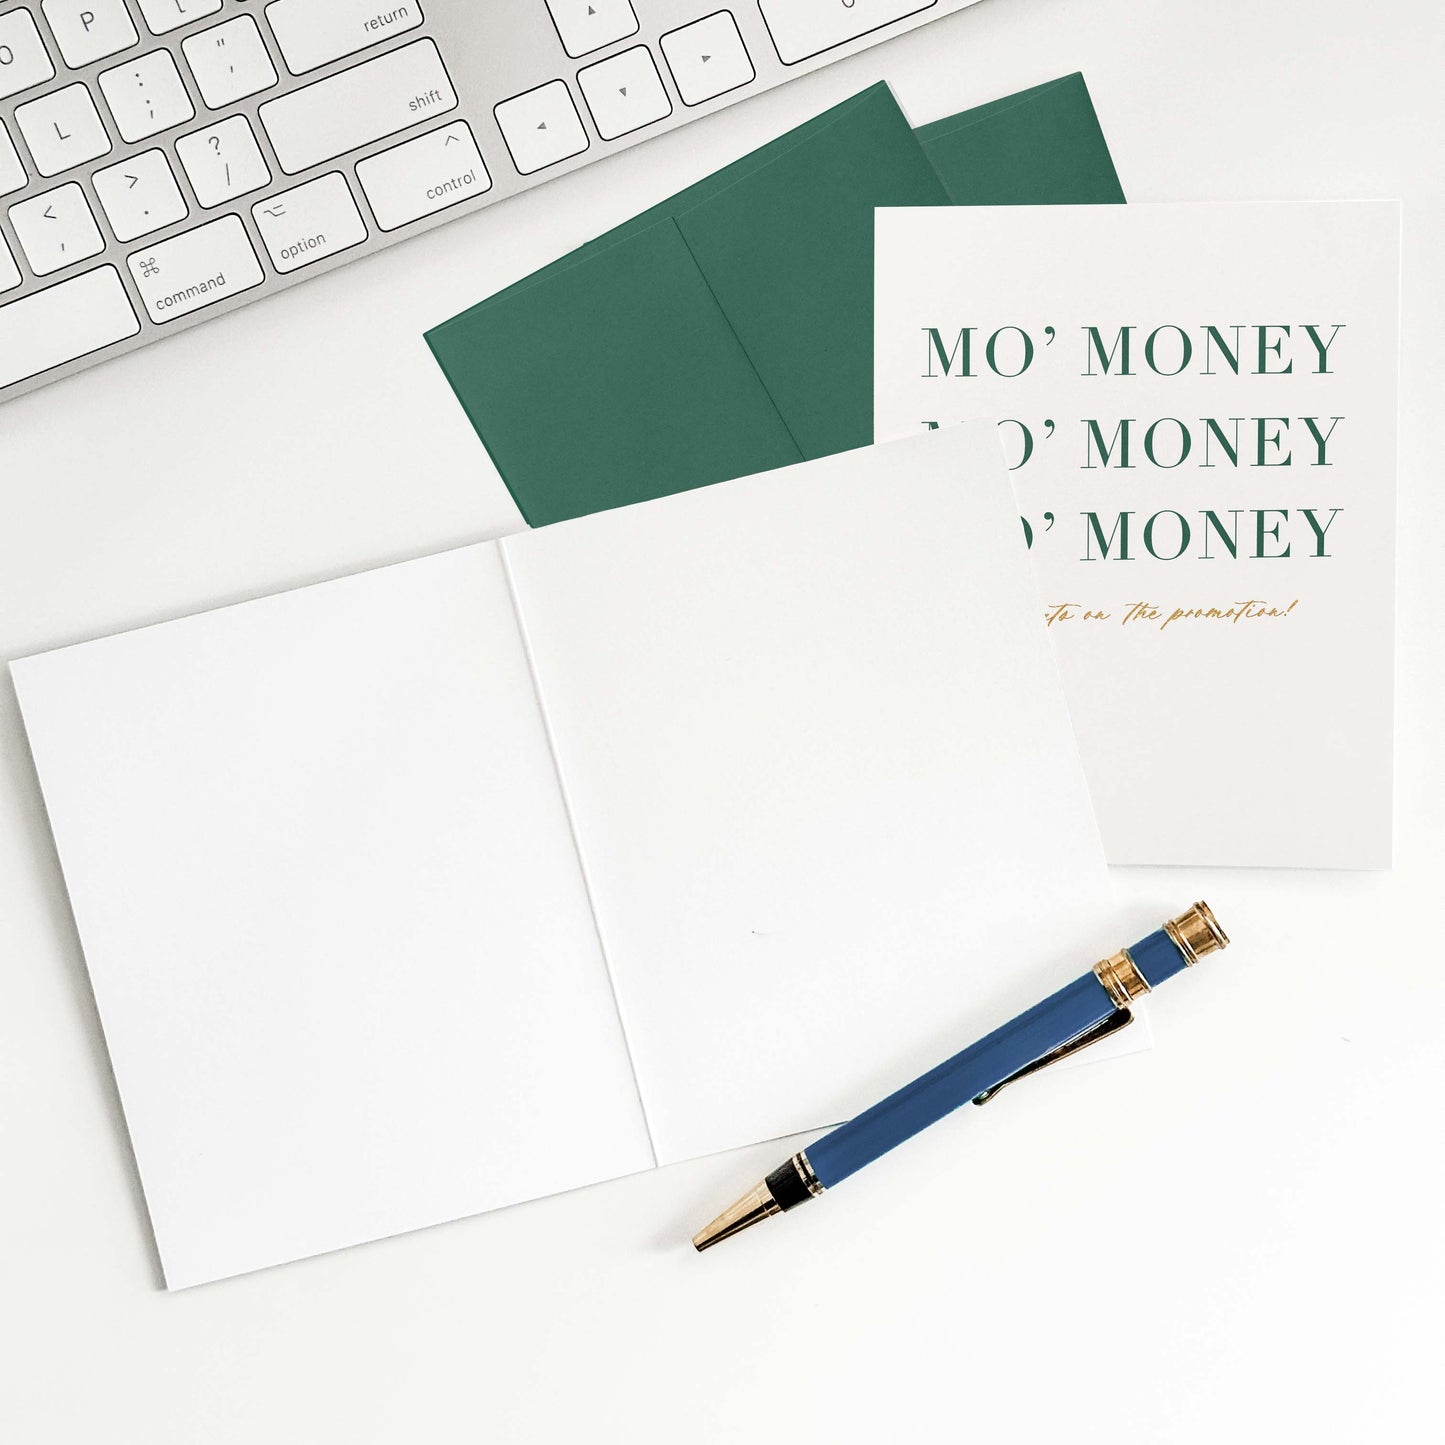 Mo' Money Promotion Card